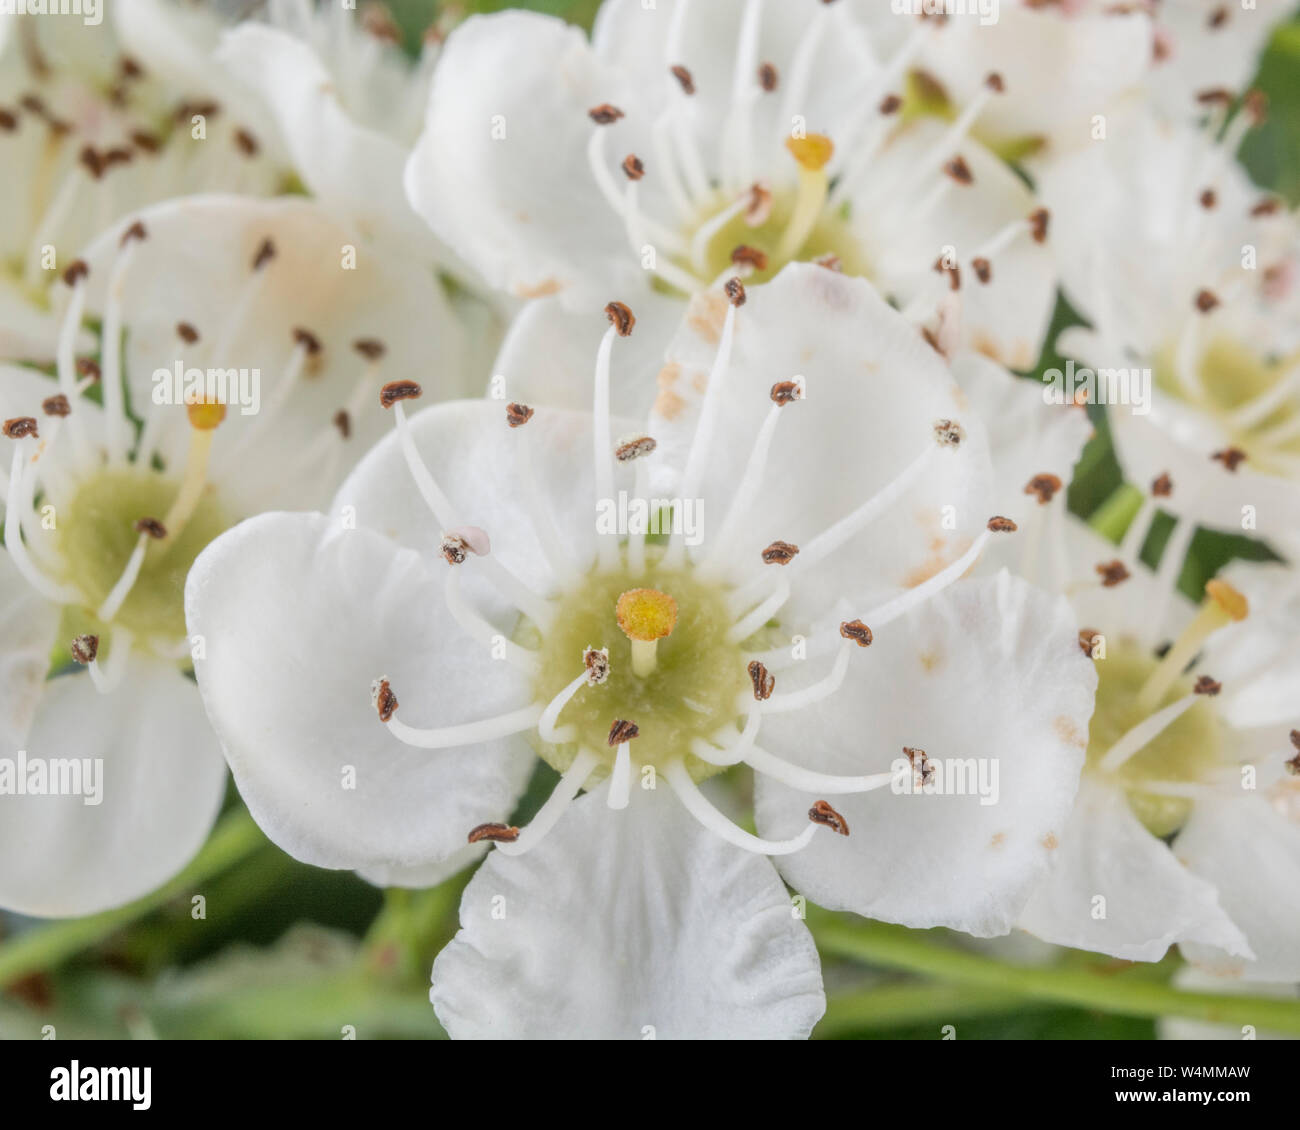 Macro close-up white flower blossom of Common Hawthorn tree / Crataegus monogyna blossom. ID from flower single stigma. May blossom, medicinal plants. Stock Photo